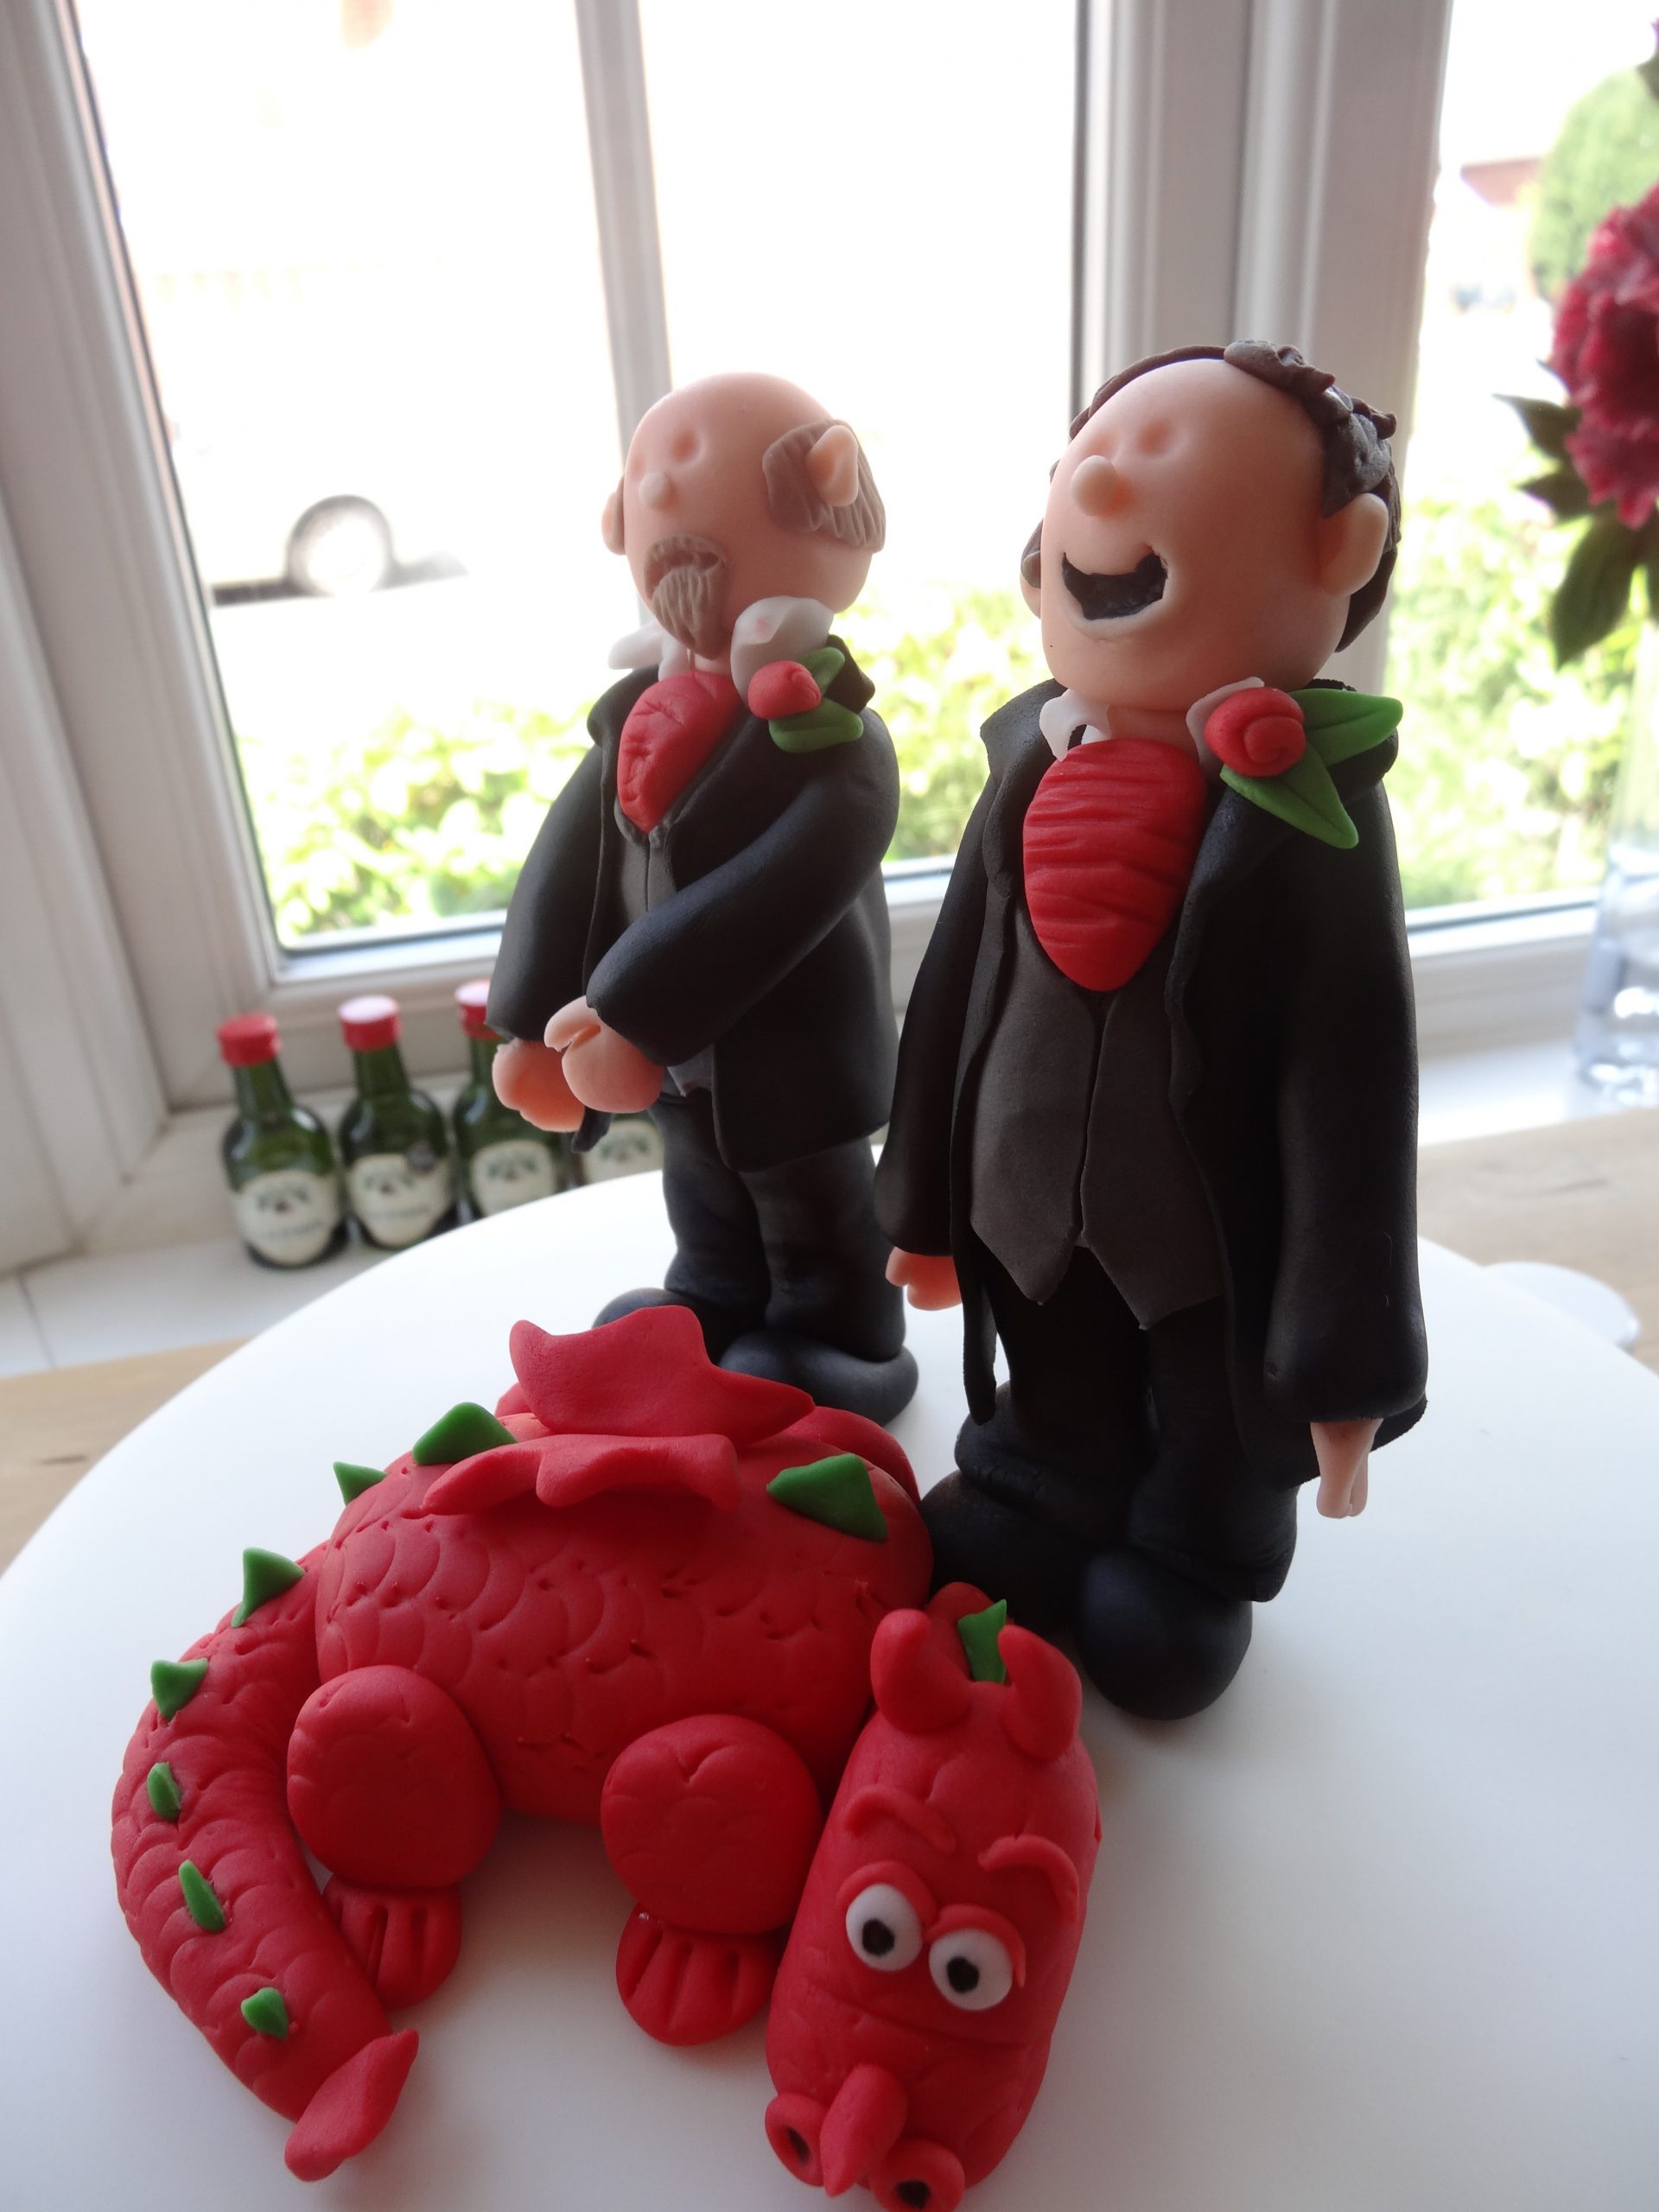 Welsh civil partnership cake